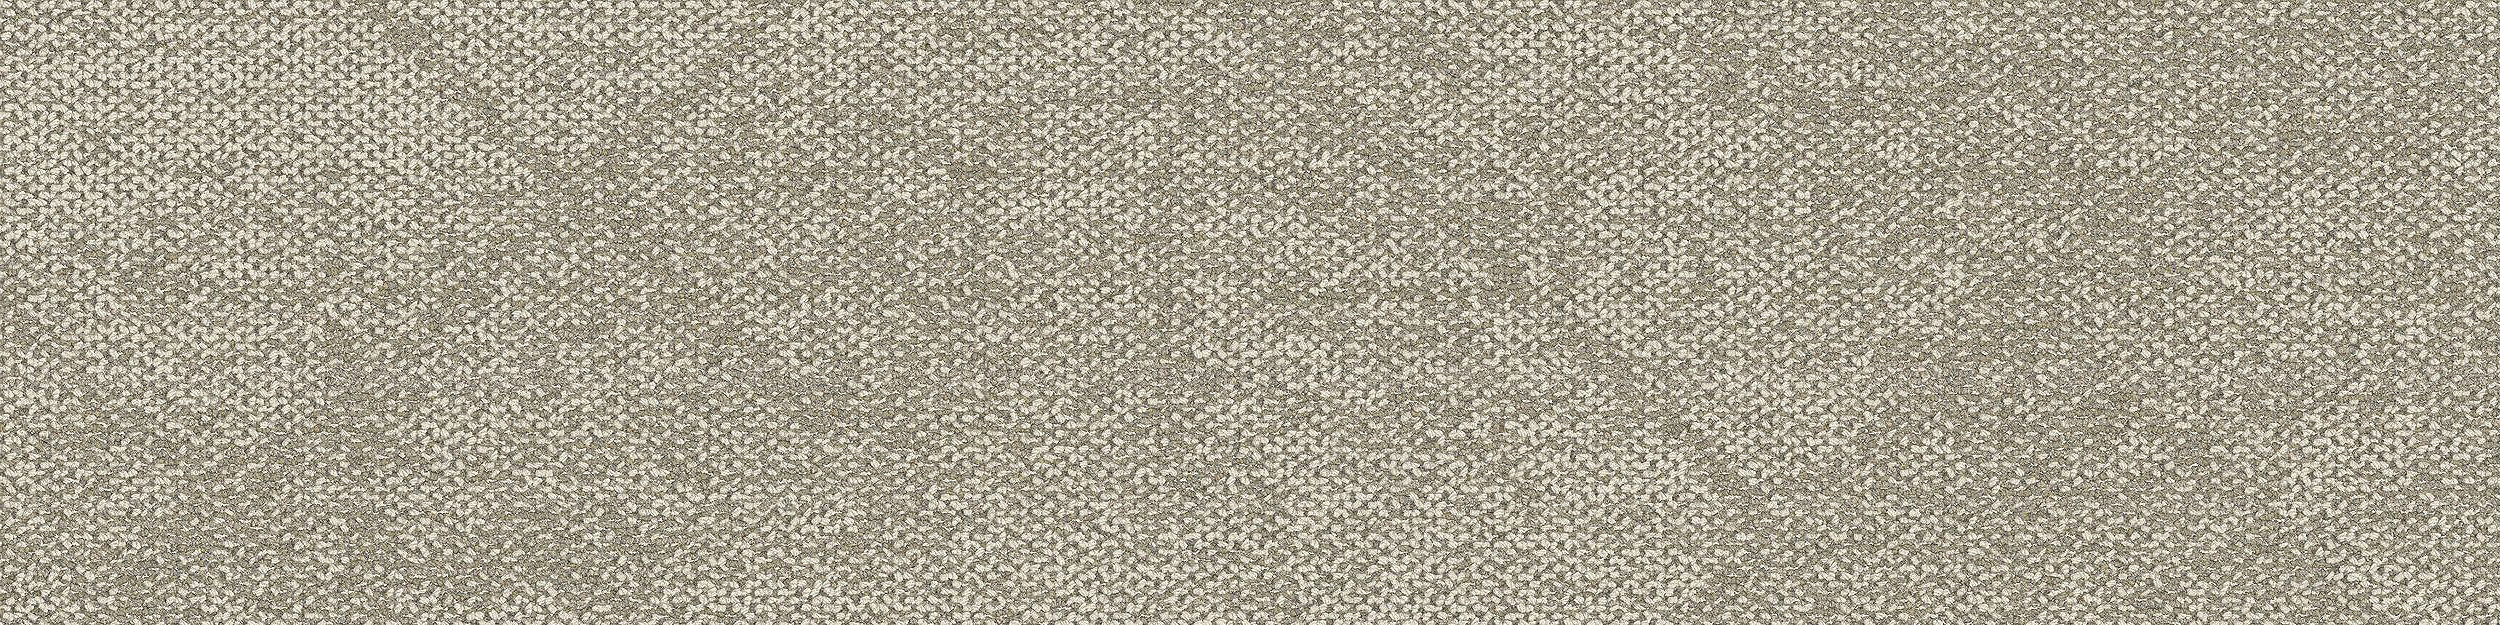 Angle Up Carpet Tile In Sulfur image number 4